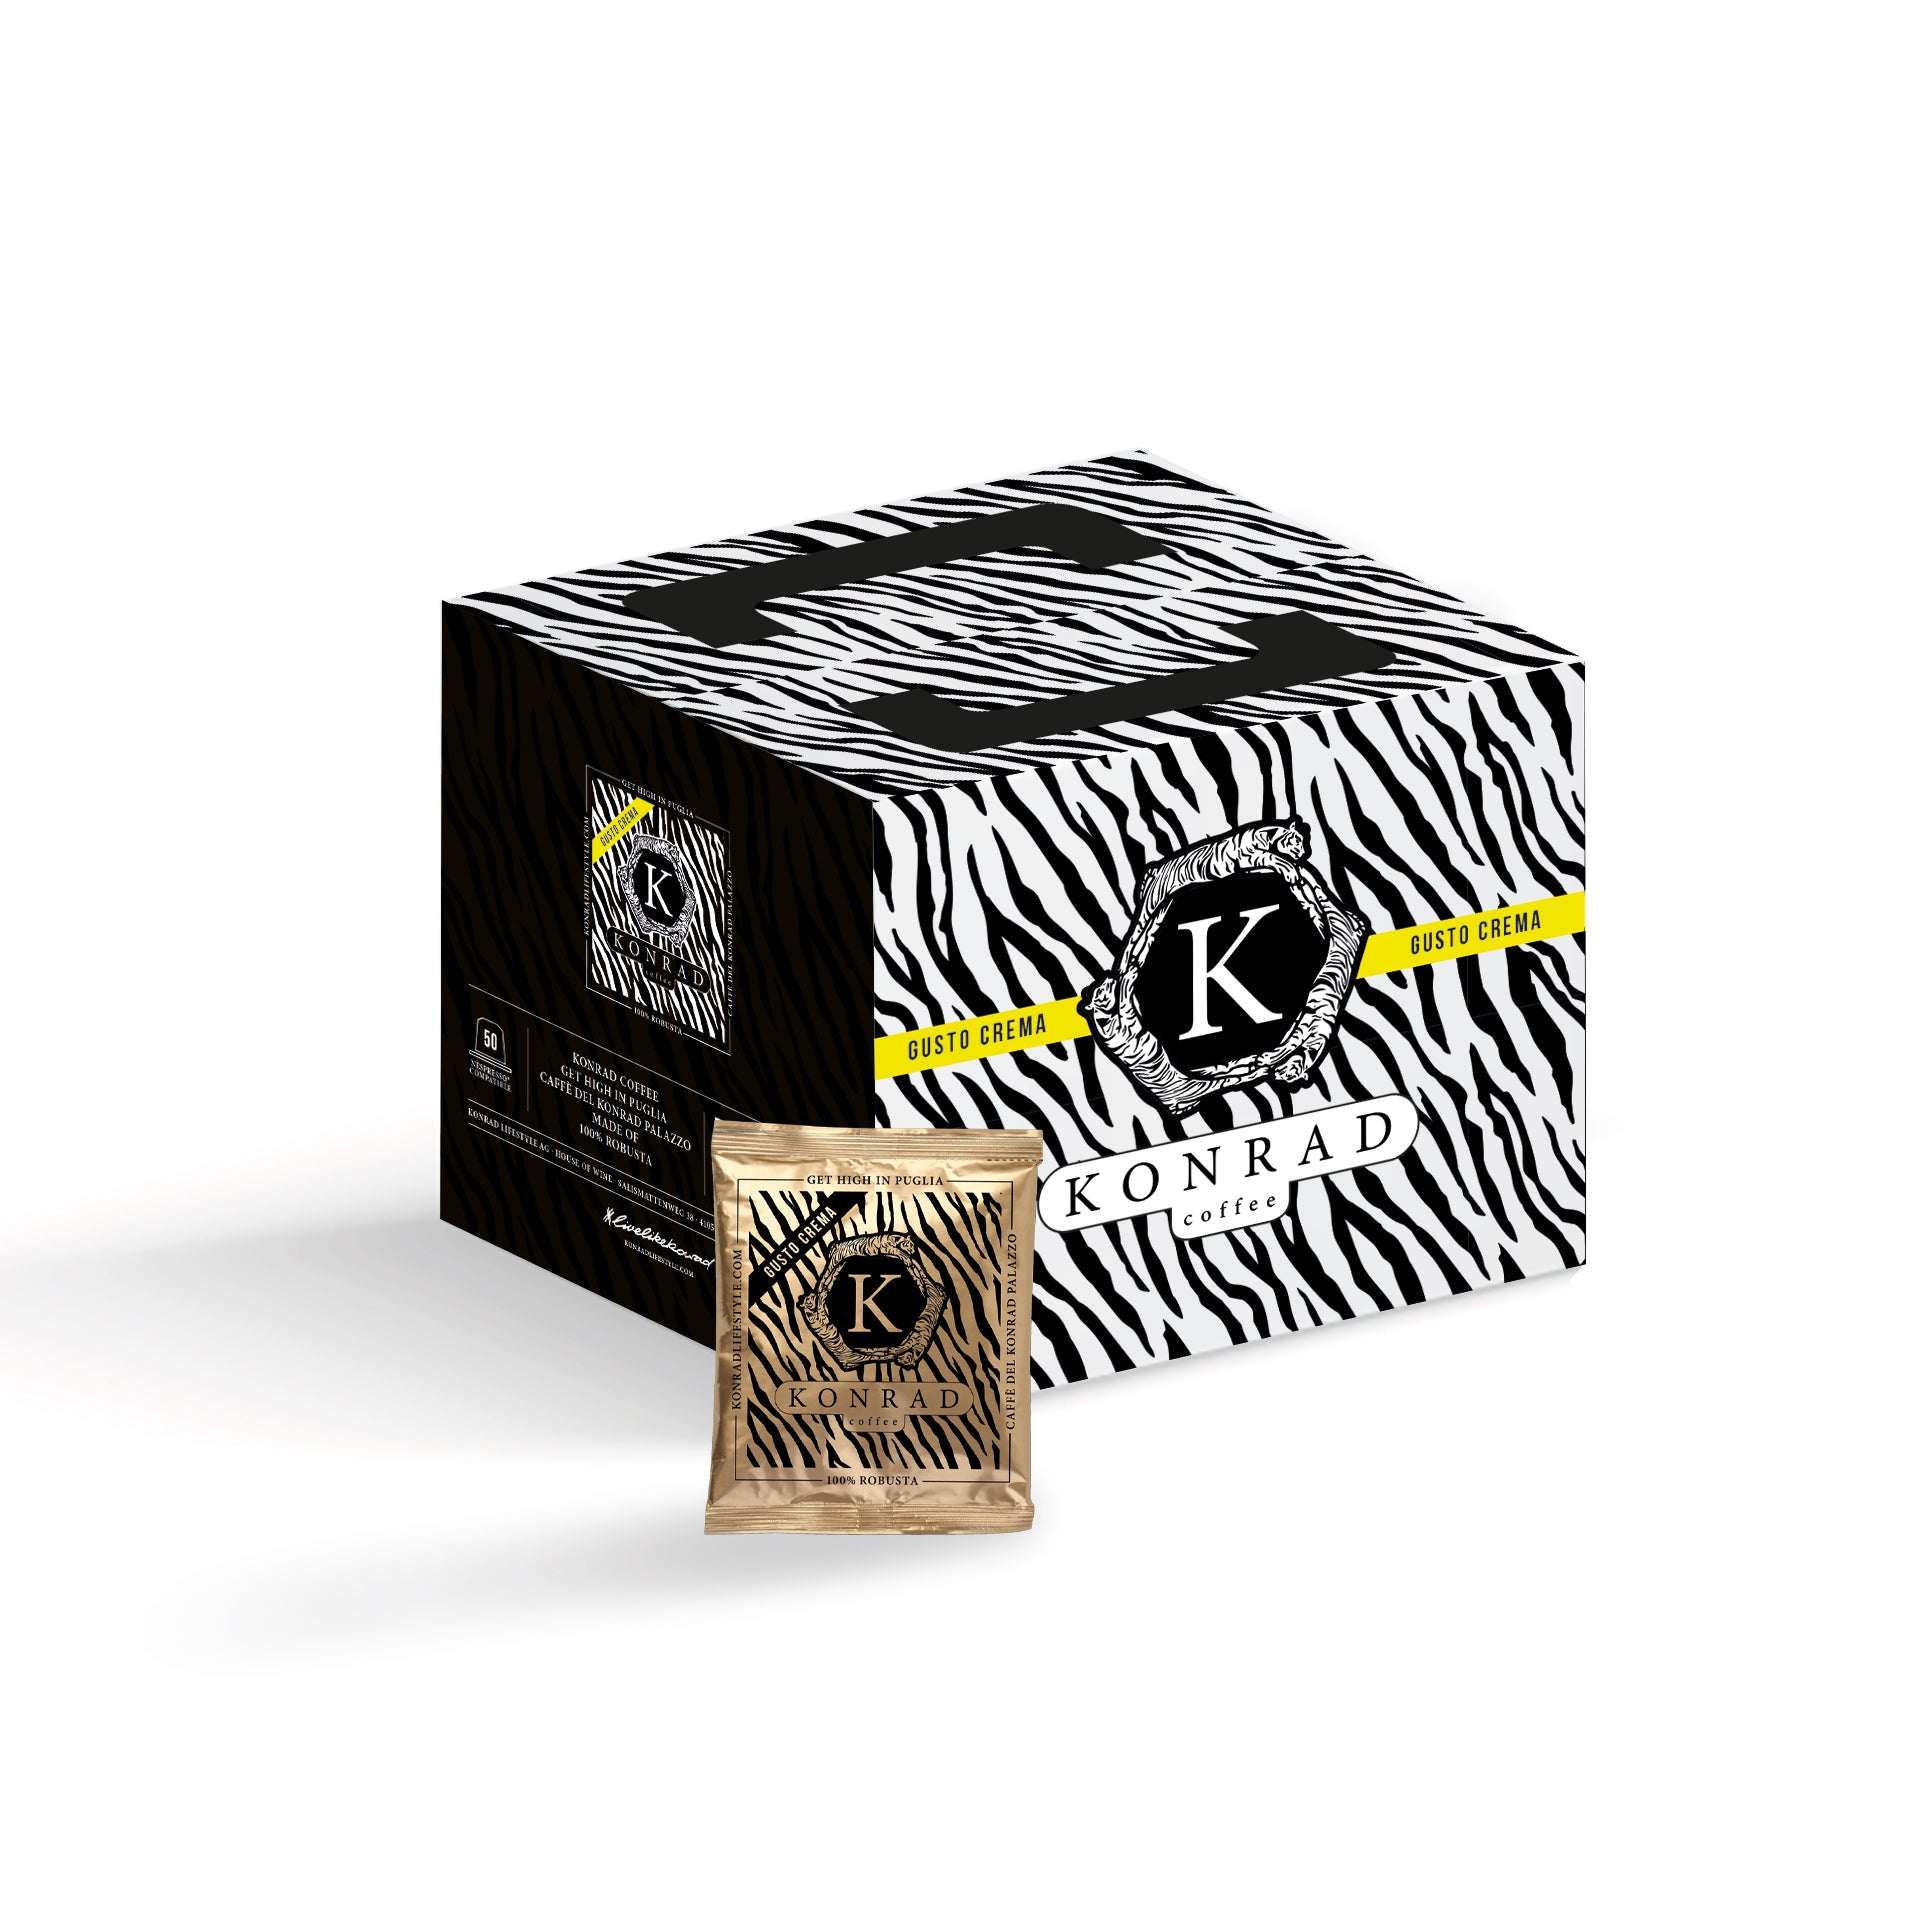 KONRAD COFFEE "GUSTO CREMA" (BOX OF 50)